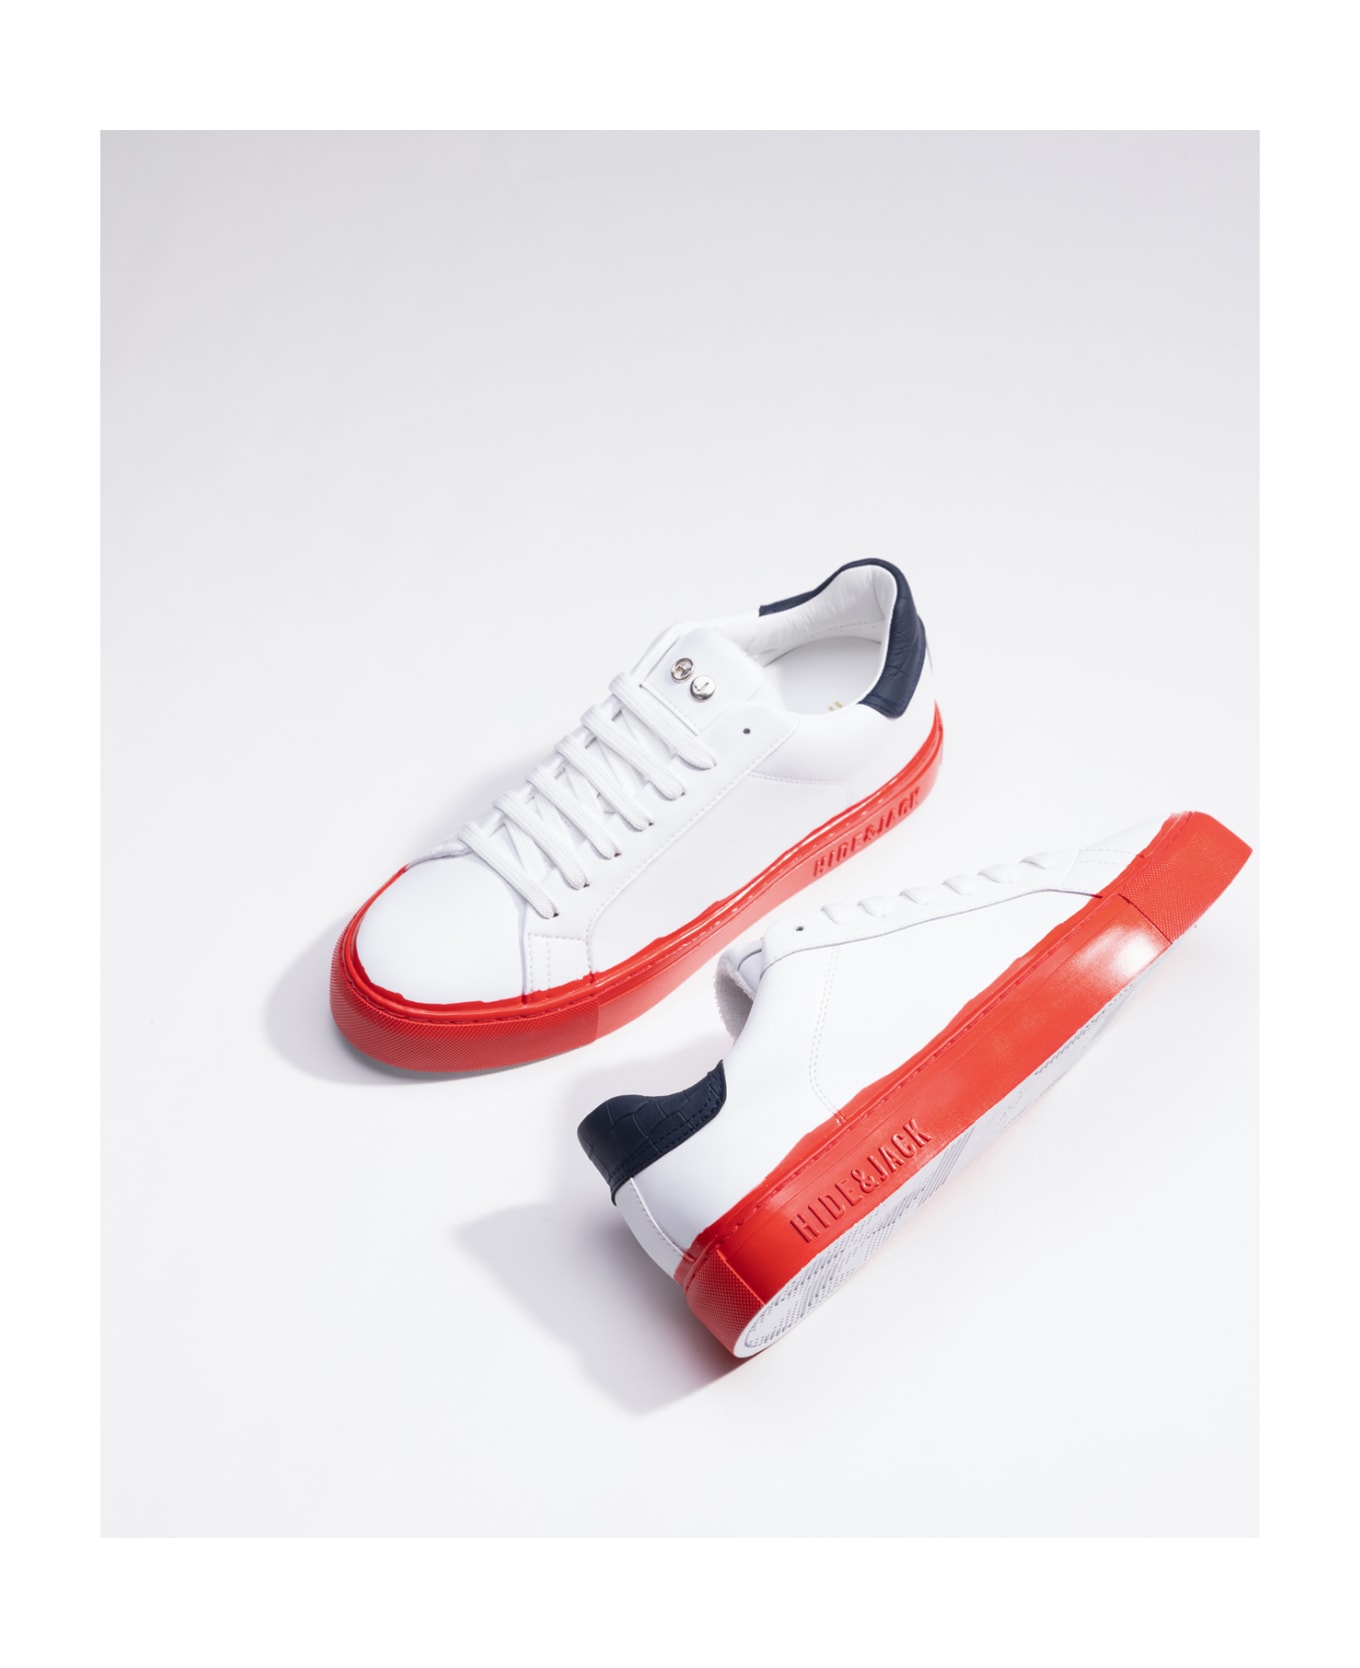 Hide&Jack Low Top Sneaker - Sky Candy Blue Red スニーカー